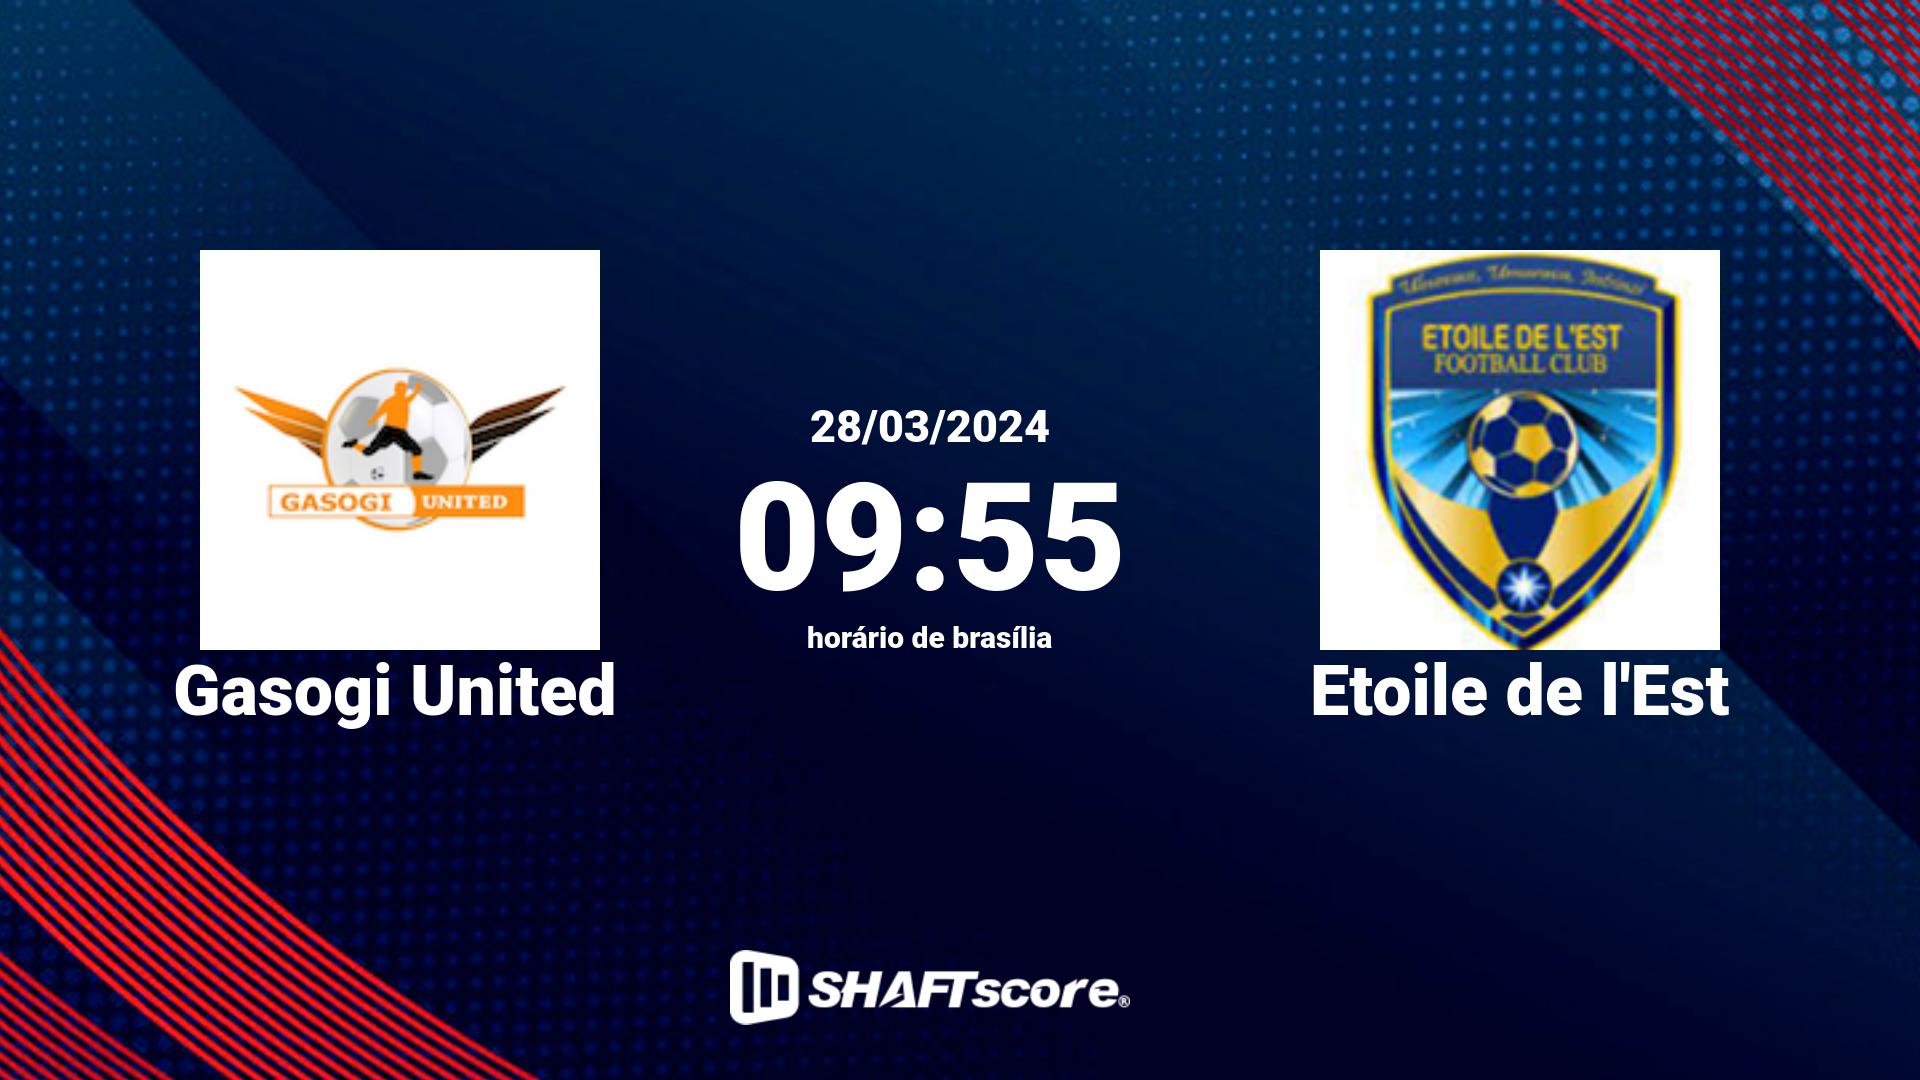 Estatísticas do jogo Gasogi United vs Etoile de l'Est 28.03 09:55